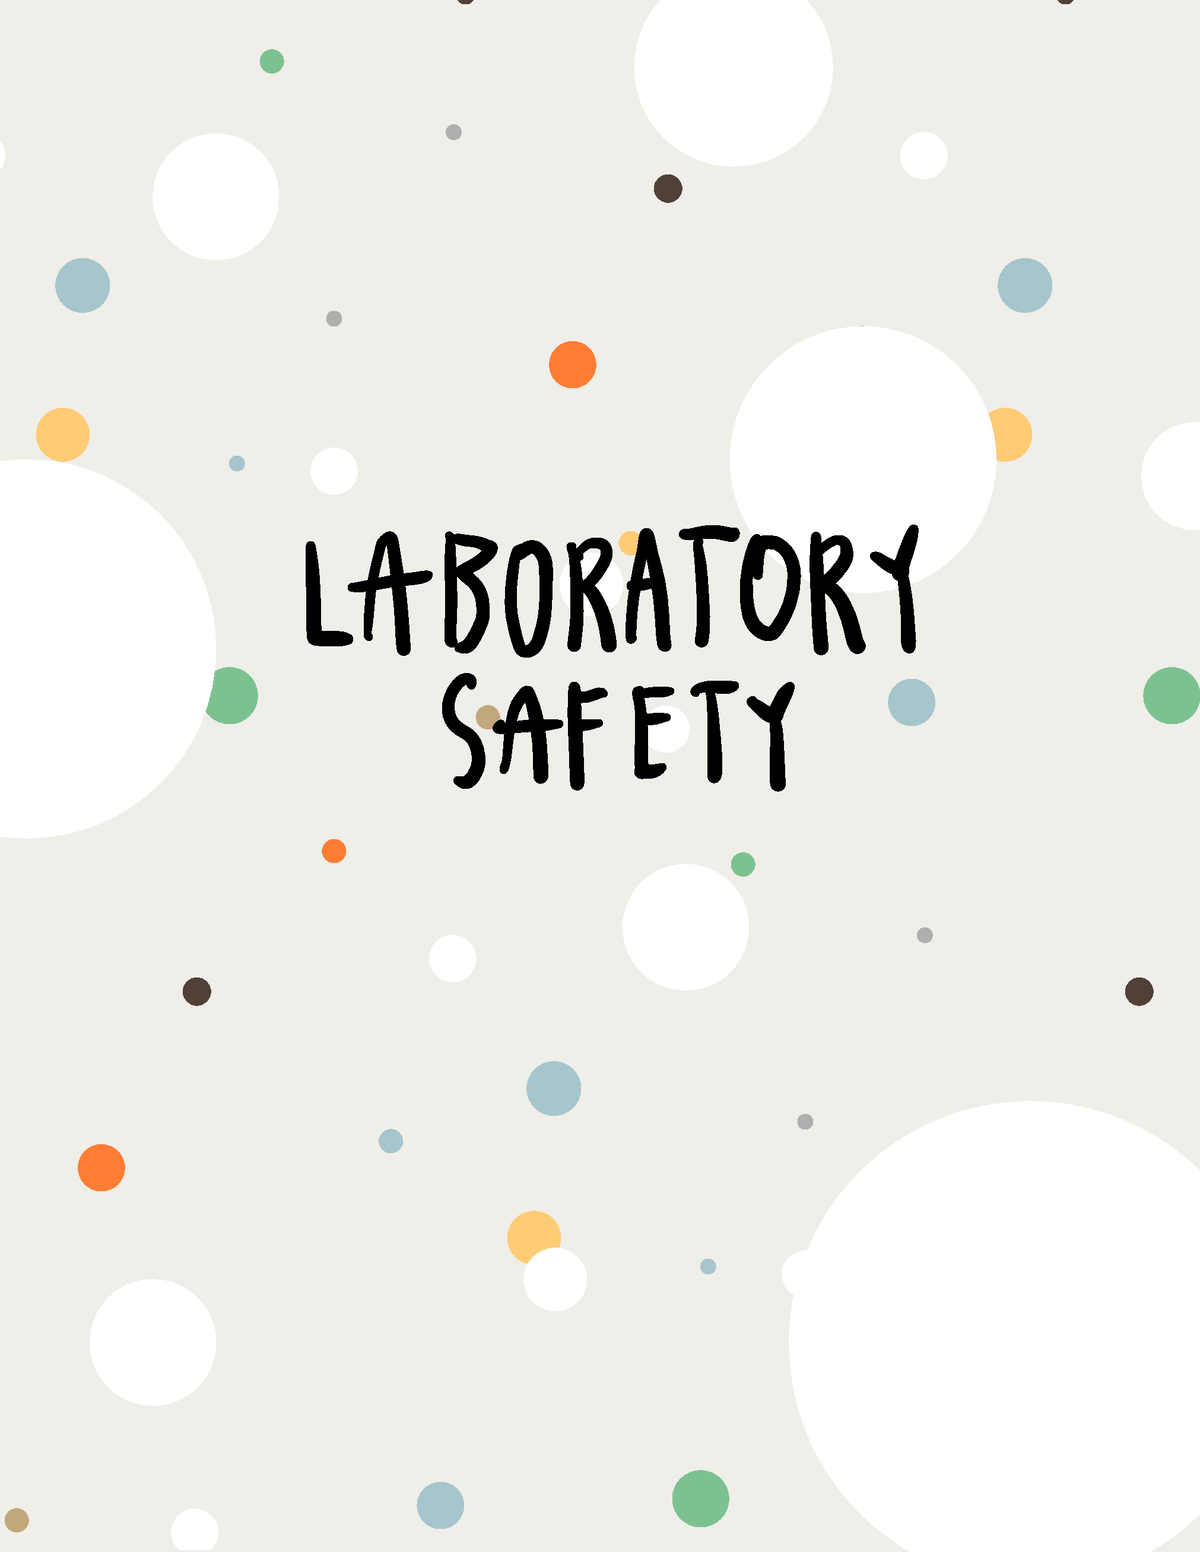 lab safety slogans